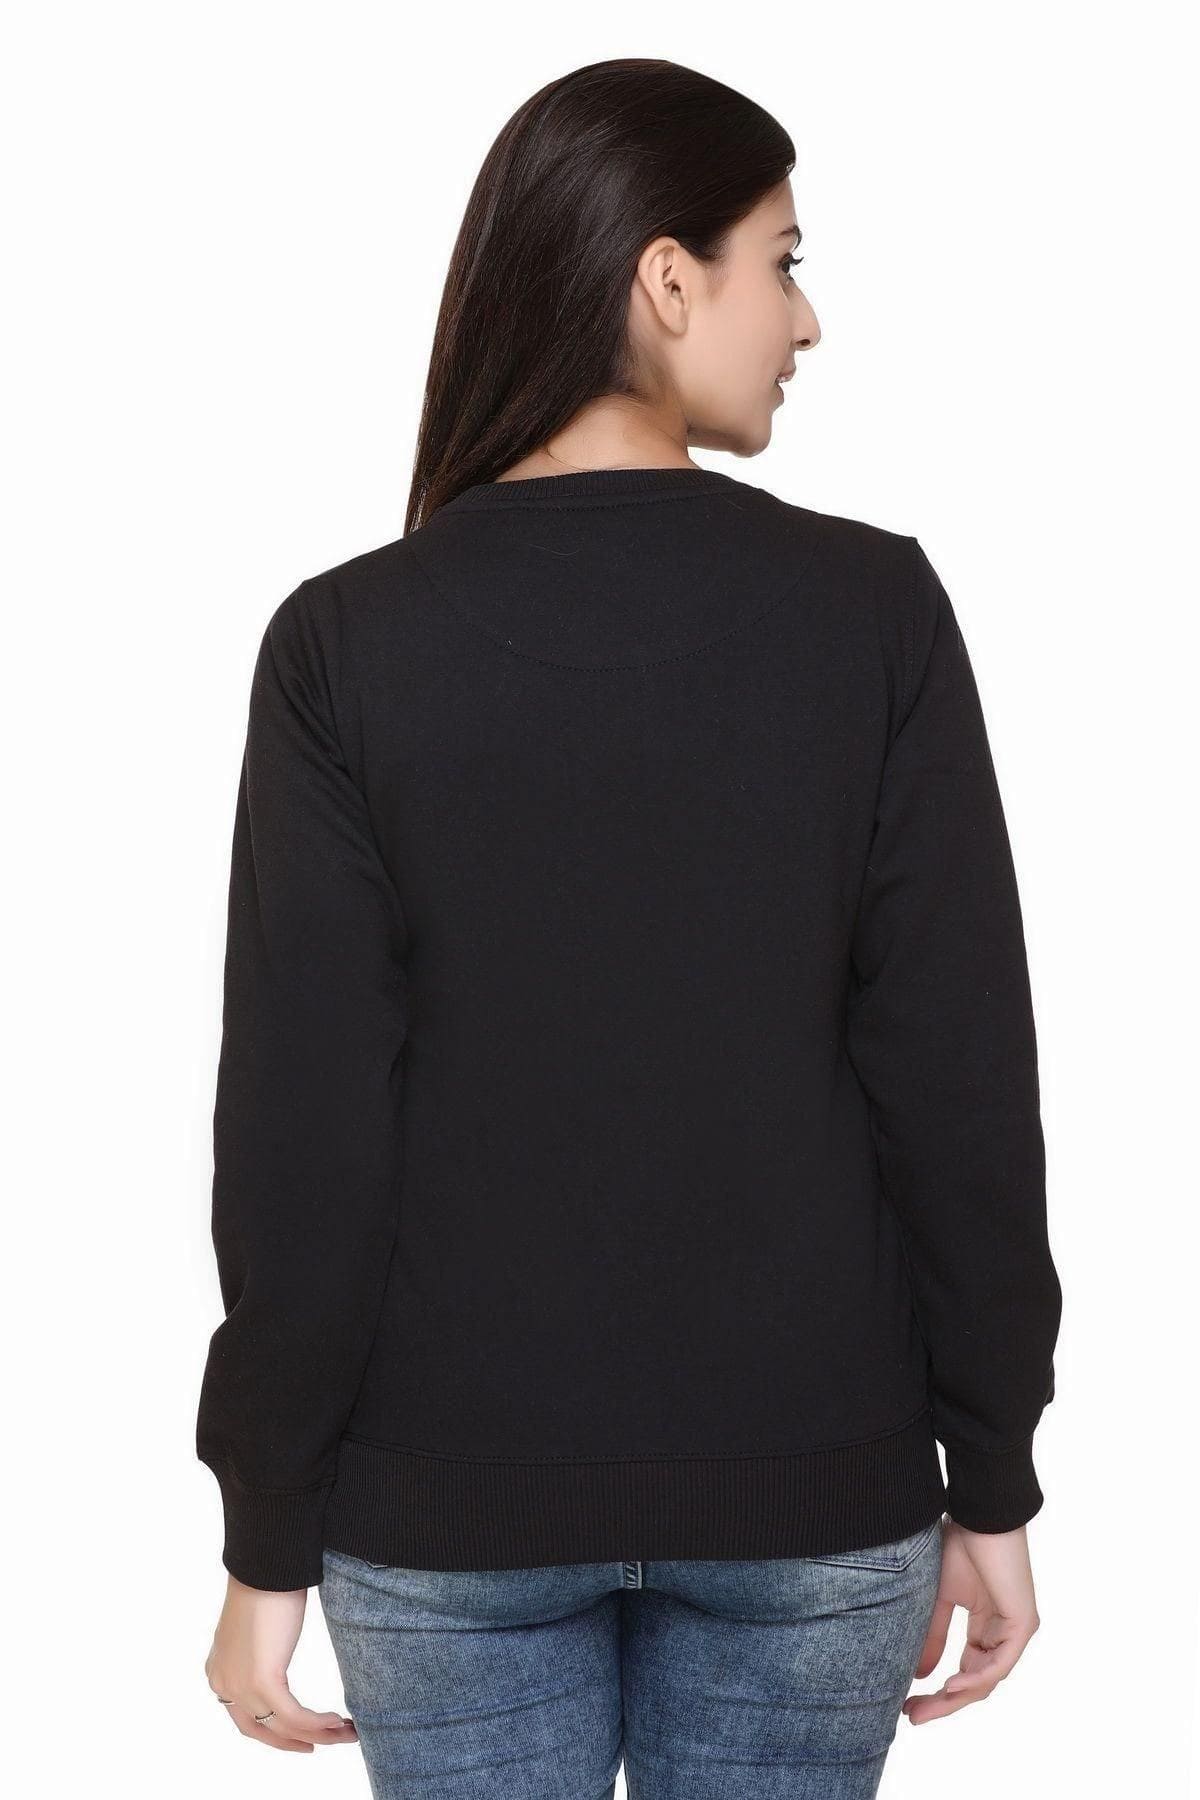 Women's Cotton Fleece Printed Sweatshirts - Fizzibyizzi